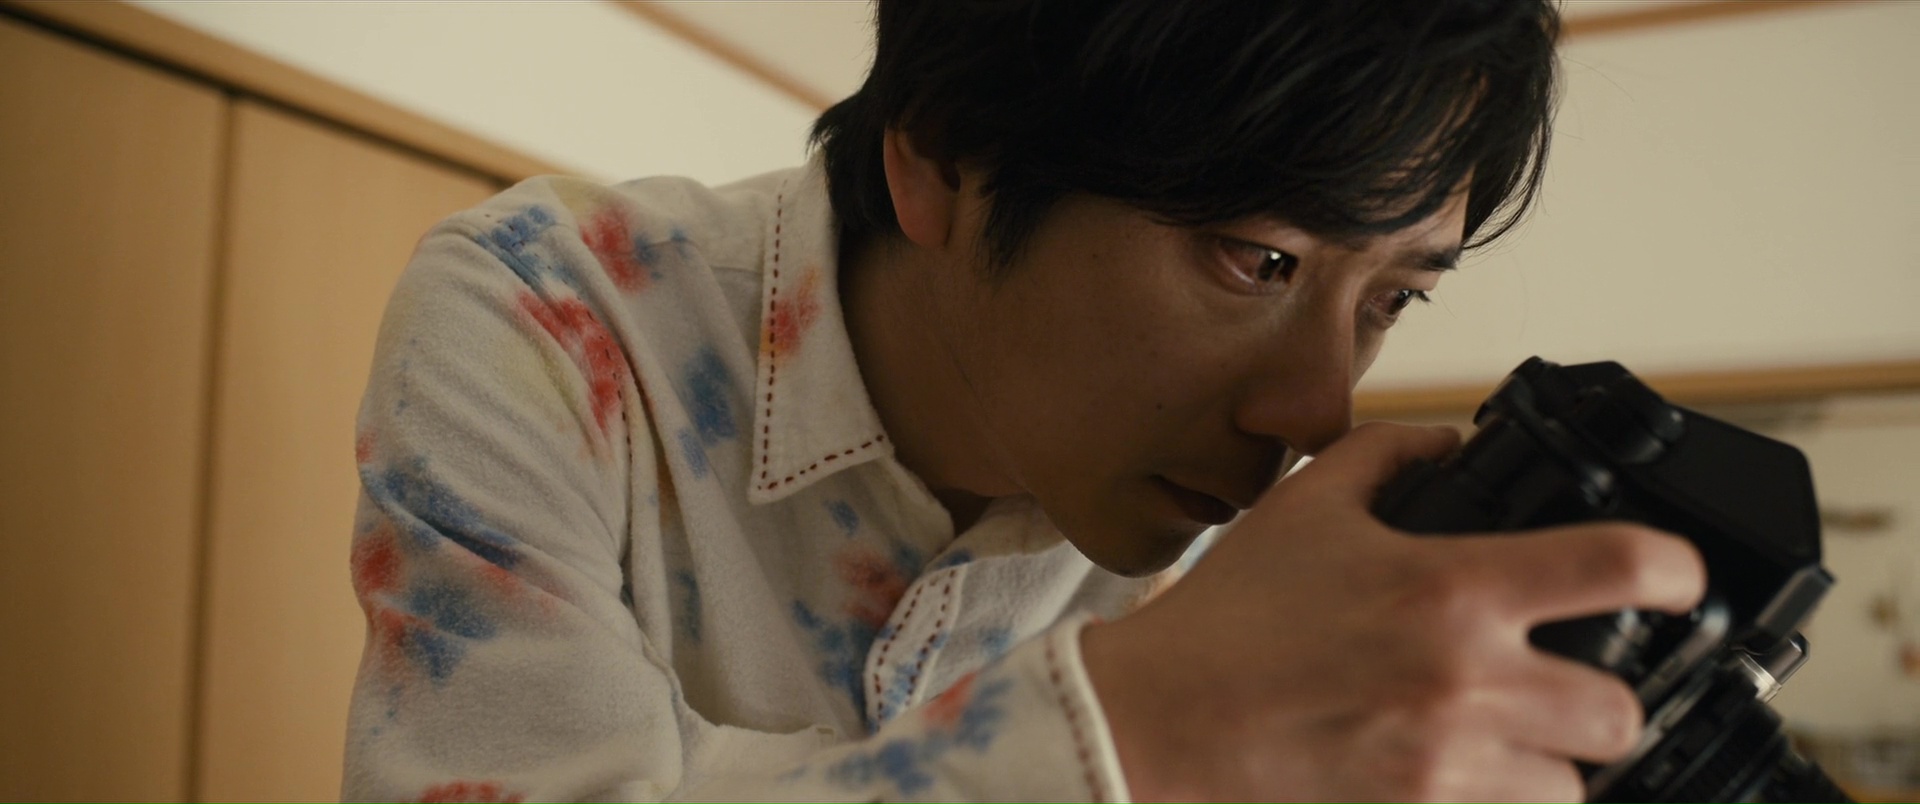 [Film] La Famille Asada, de Nakano Ryôta (2020)